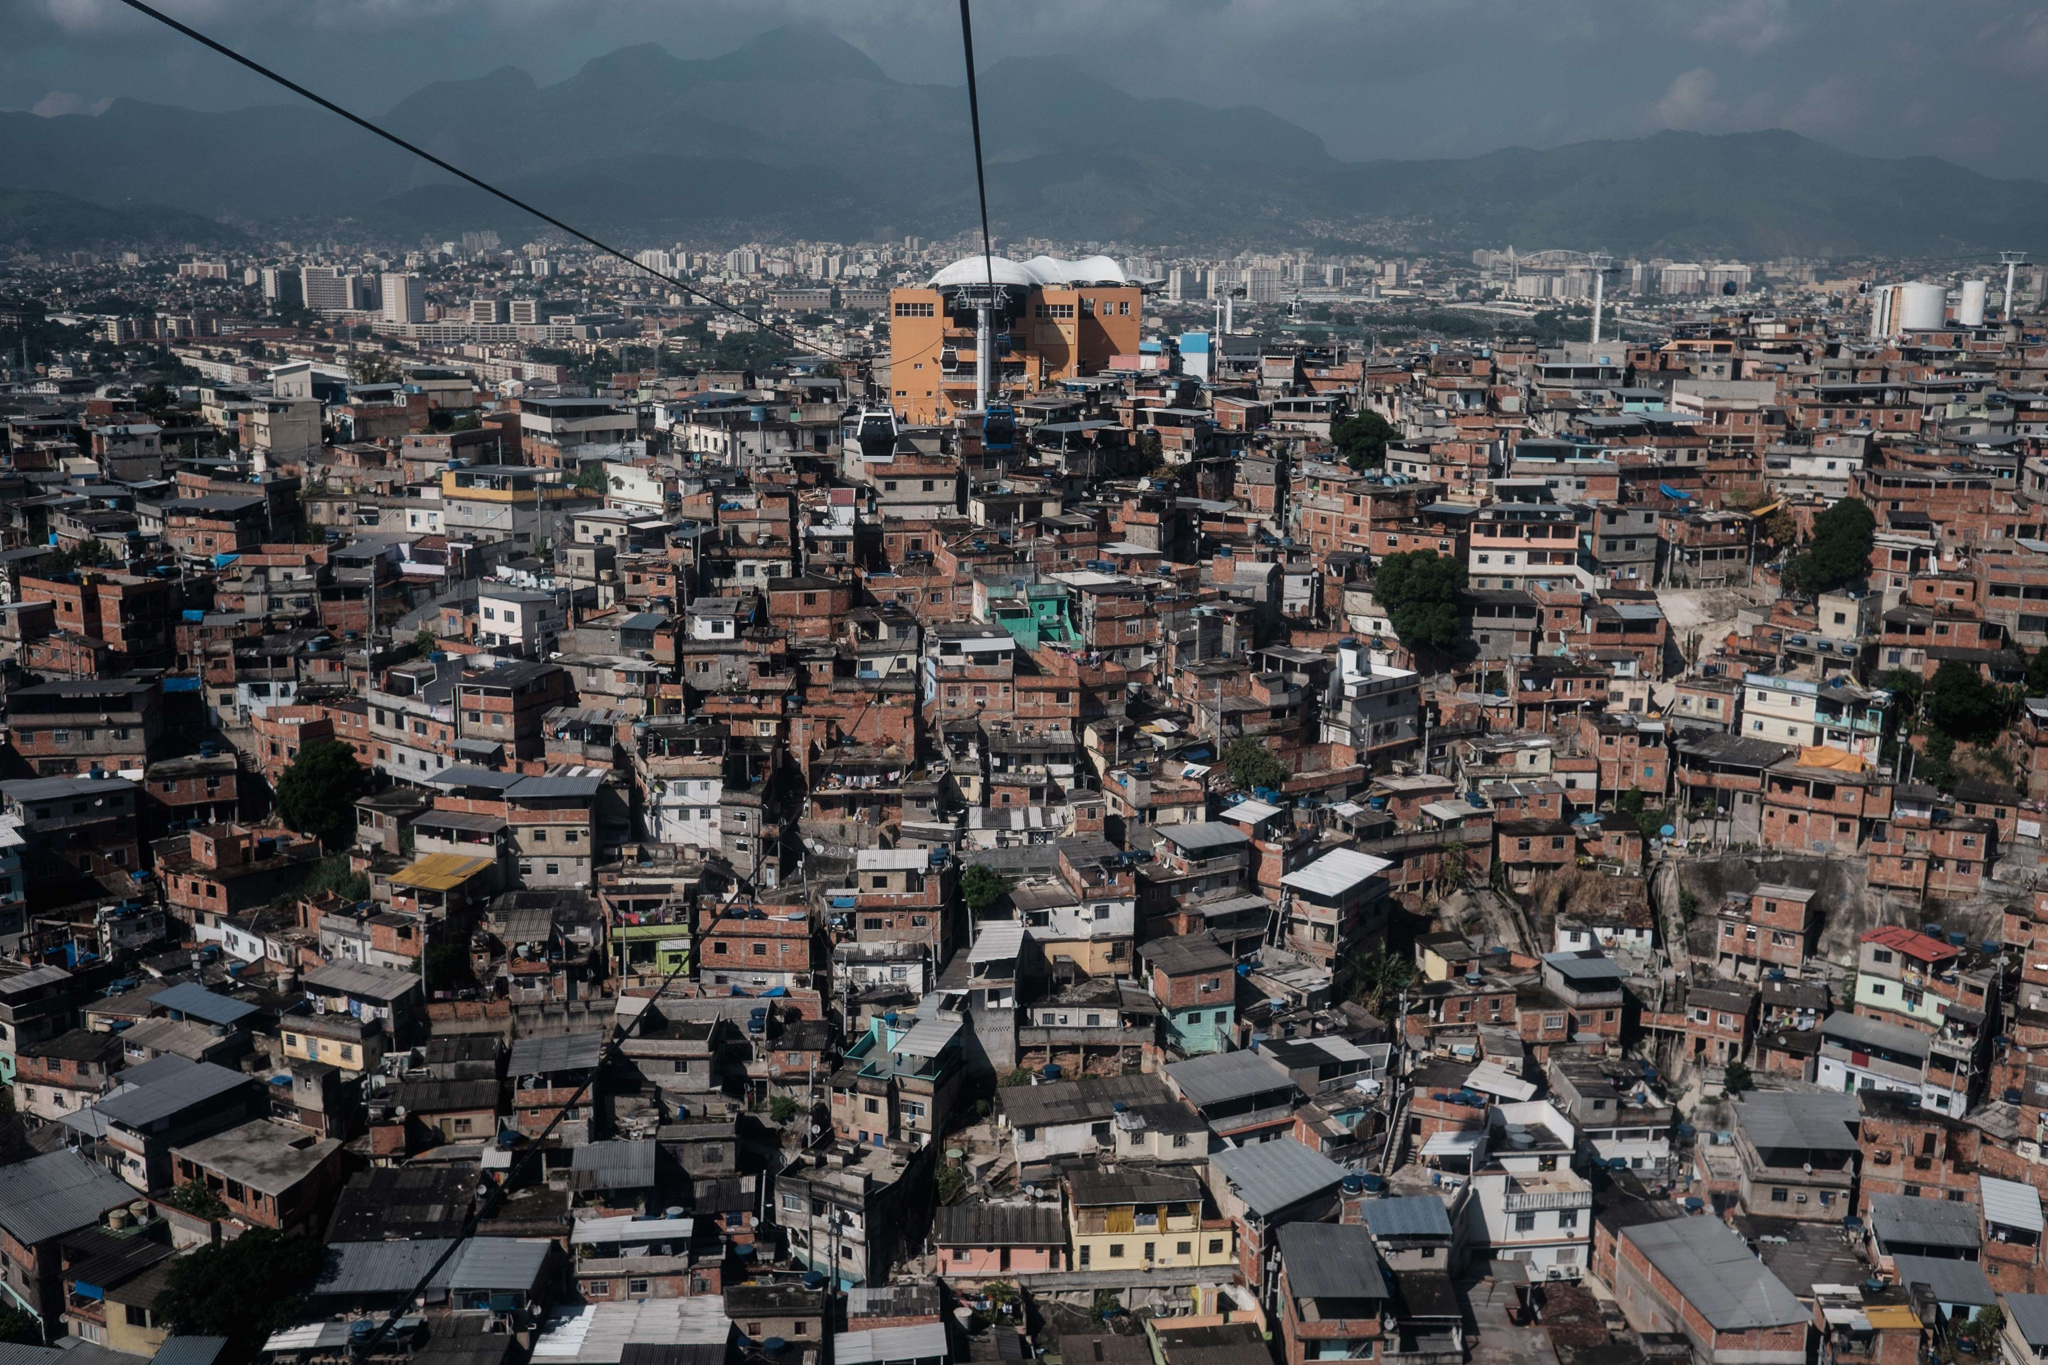 est100 一些攝影(some photos): favela, shanty, slum, squatter area. (巴西的)貧民區, (臨時搭蓋的)棚屋, 貧民區, (占用的)寮屋區